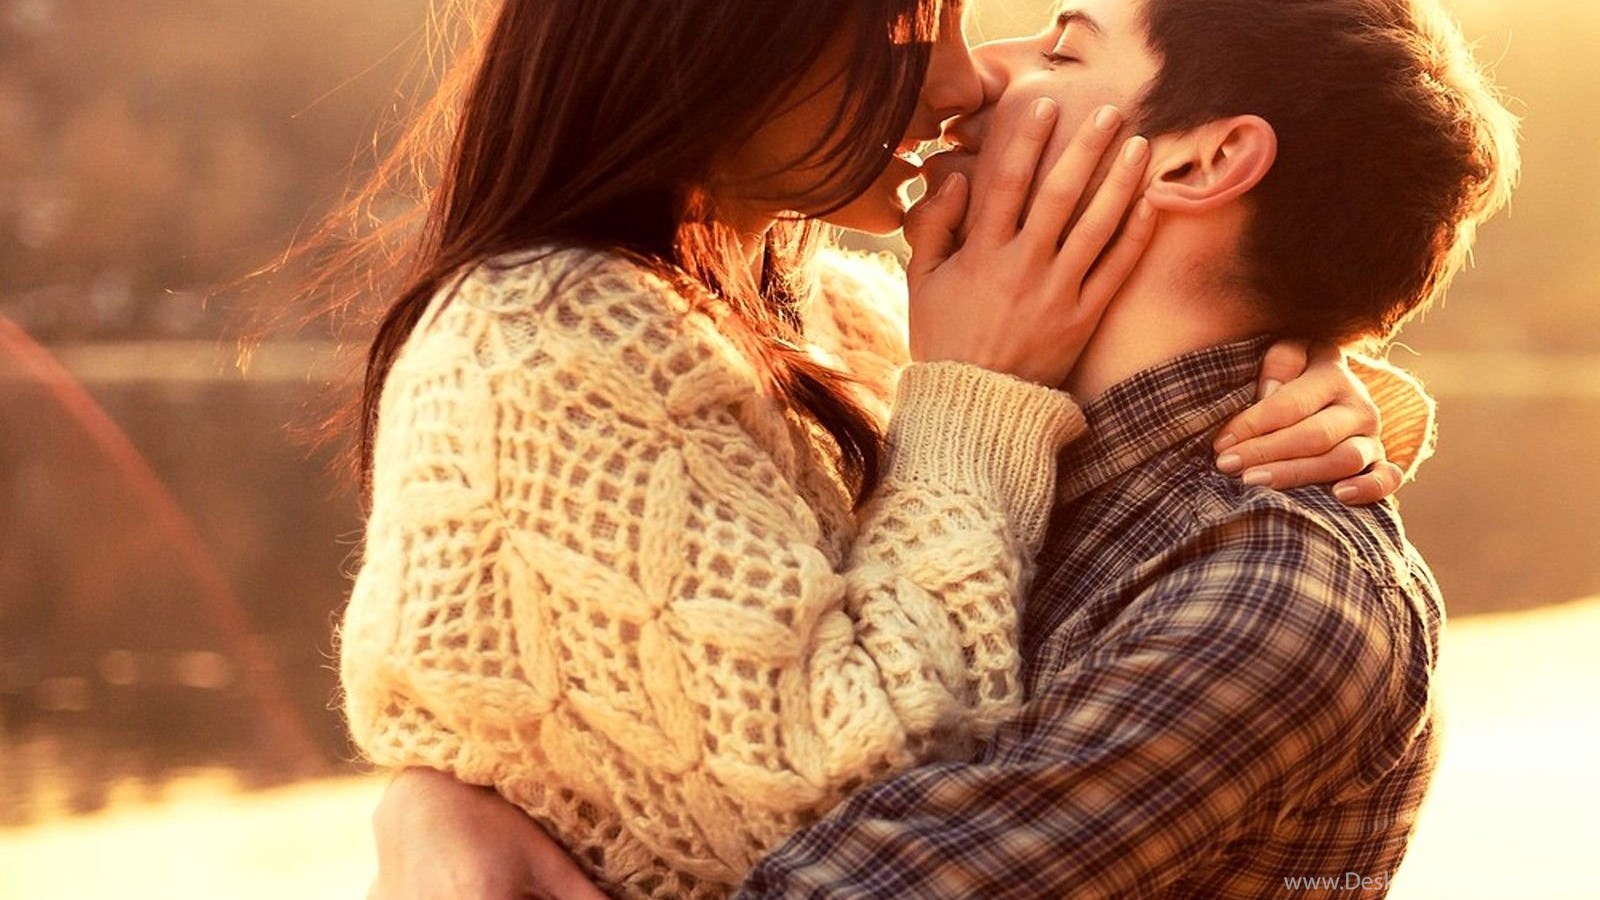 hot kiss wallpaper herunterladen,romantik,liebe,schönheit,interaktion,kuss